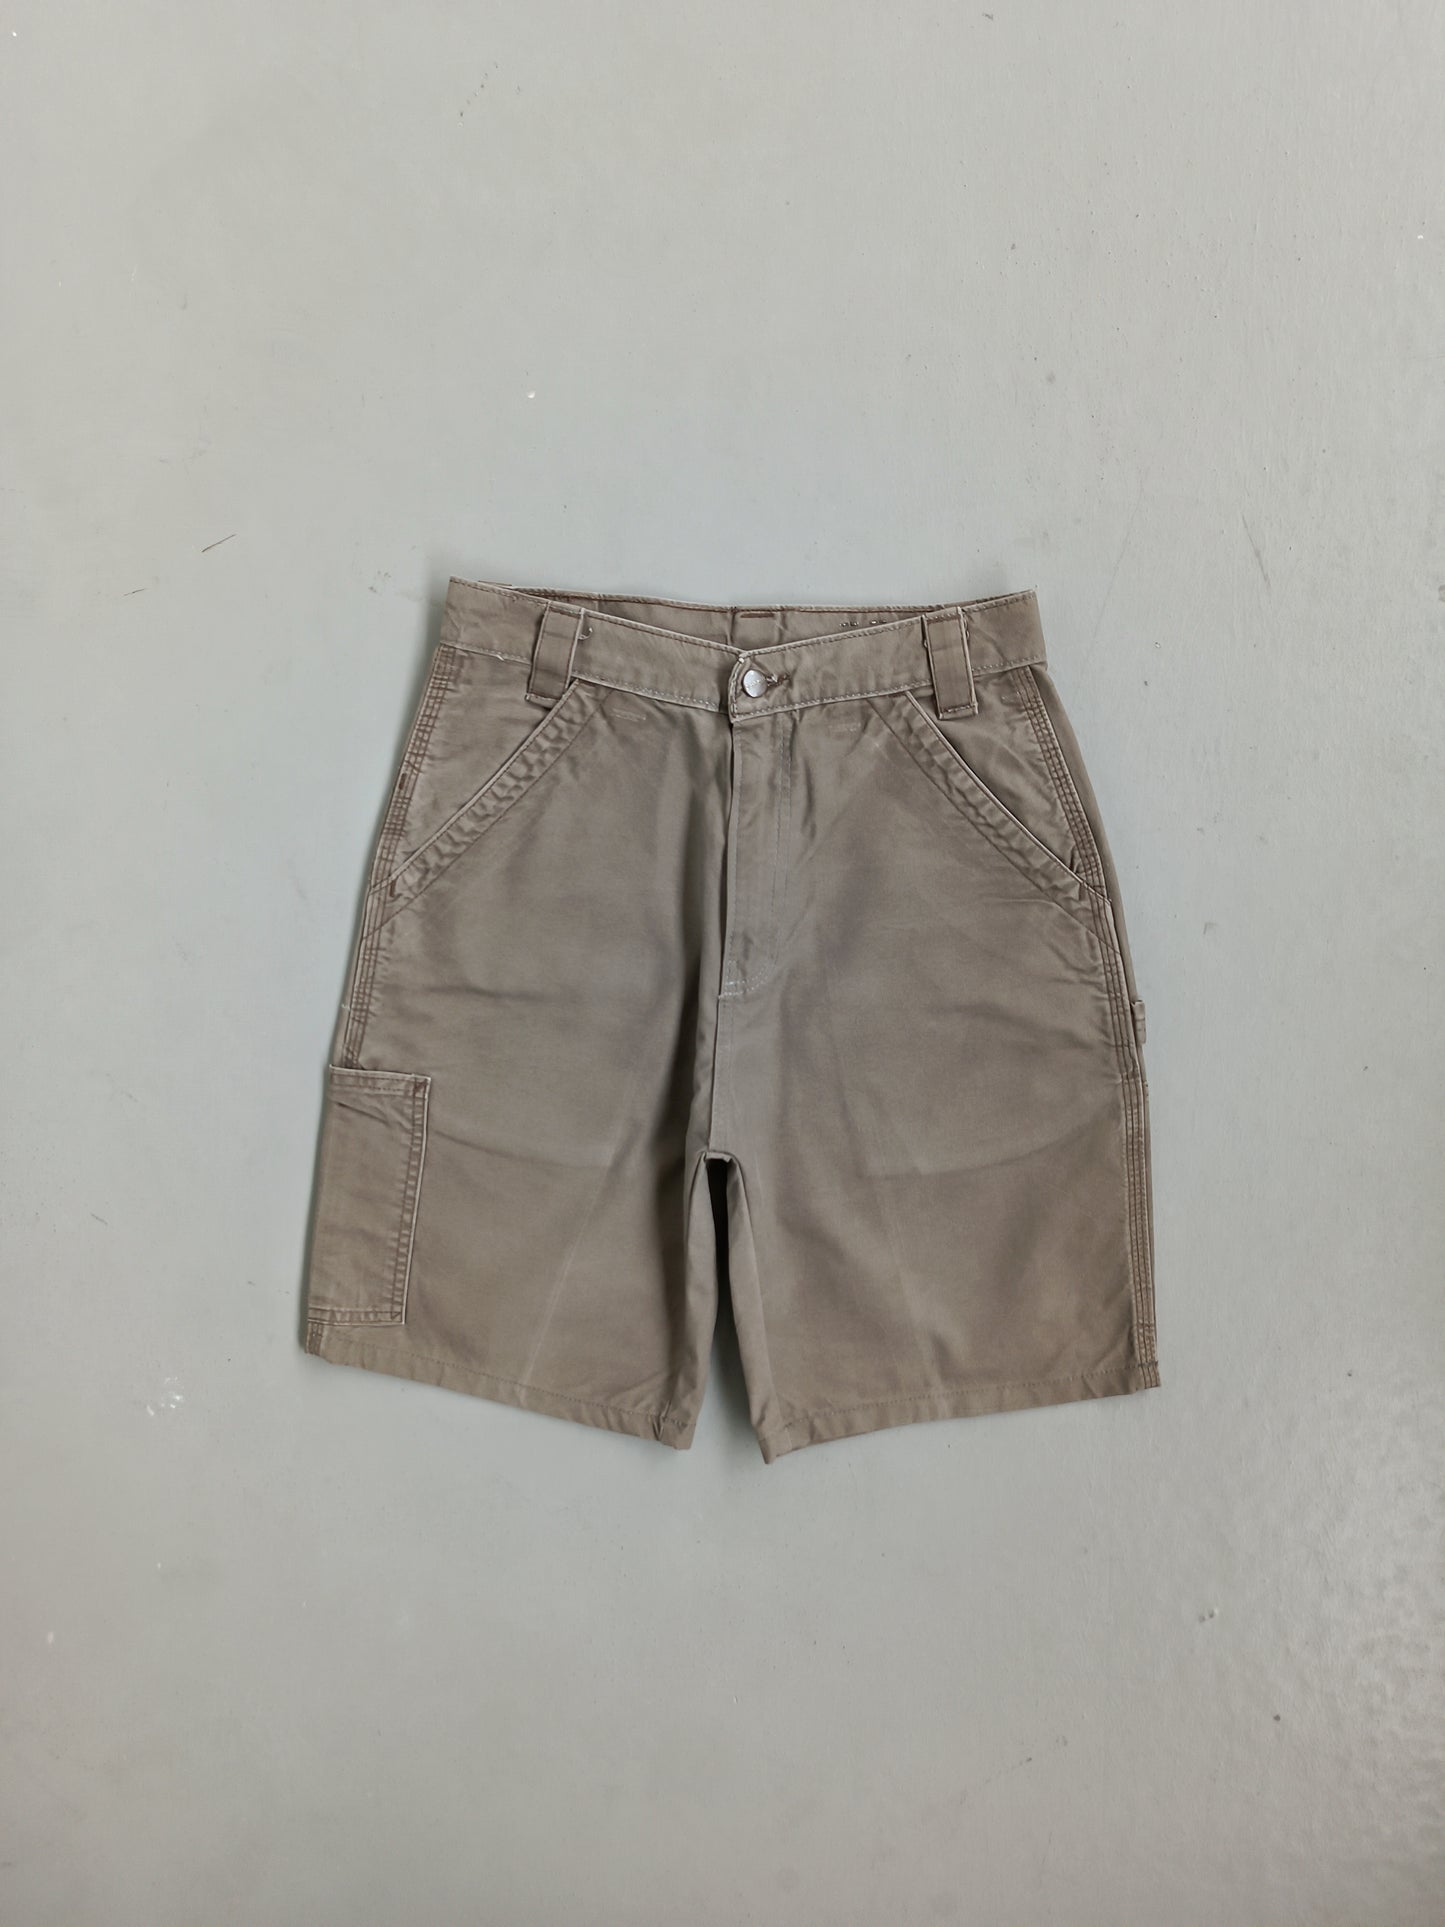 W27 Carhartt carpenter shorts